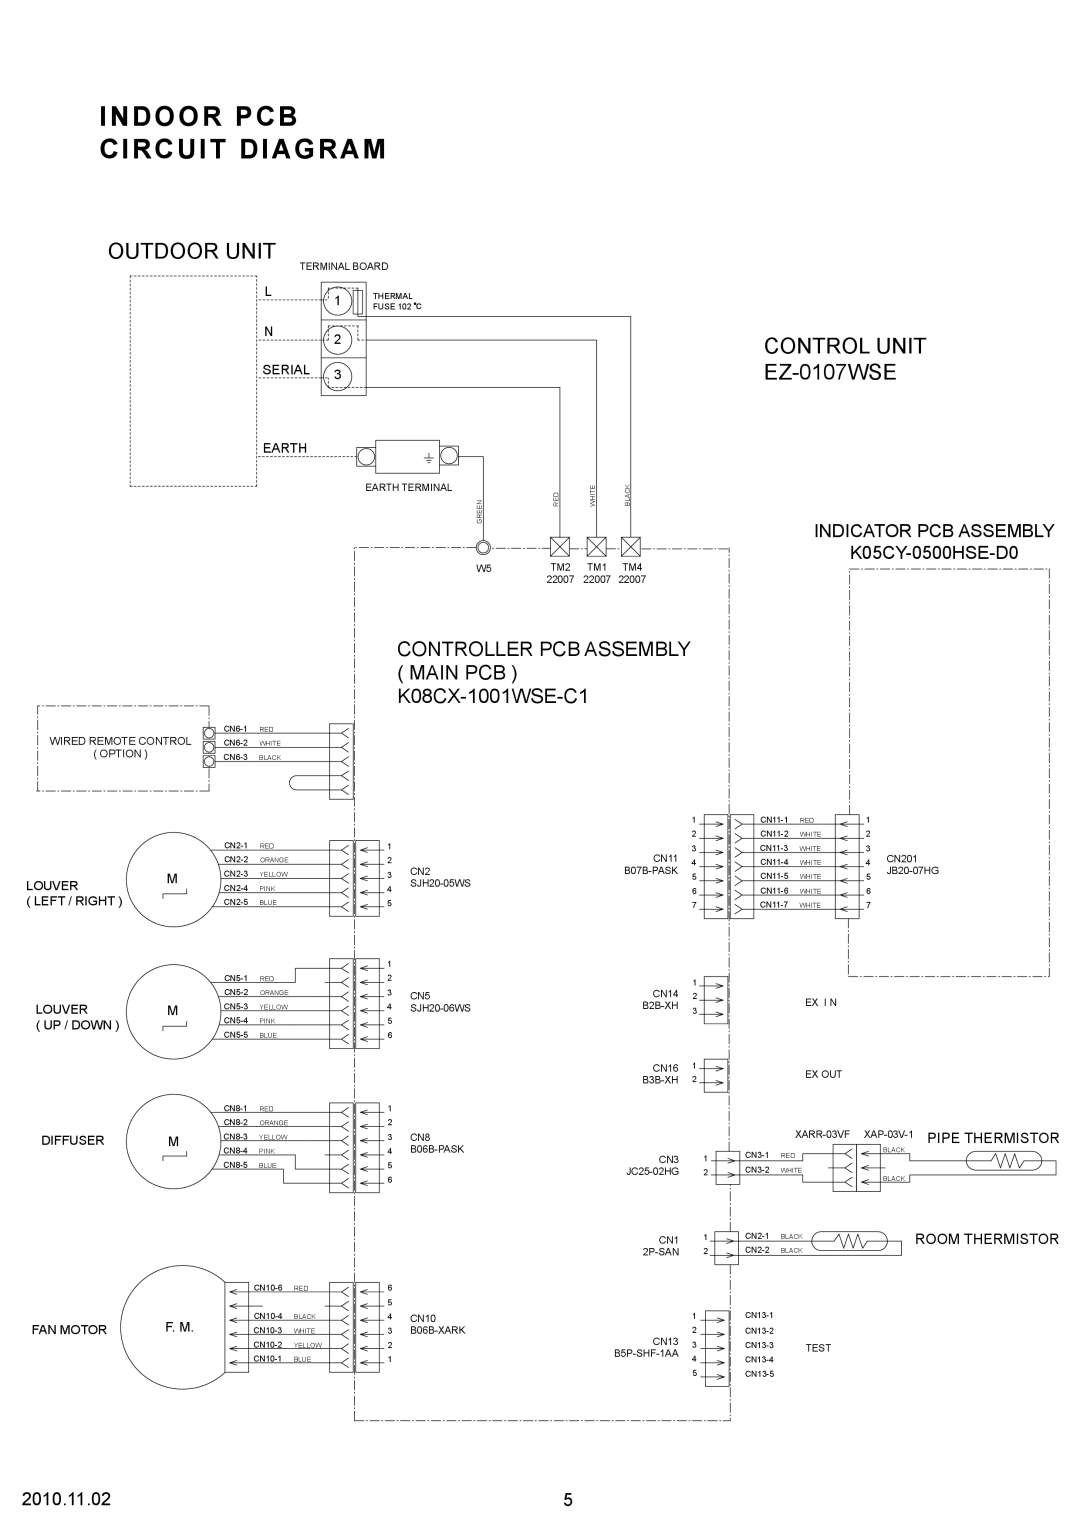 Friedrich MW24C3G, MR24C3G specifications Indoor Pcb Circuit Diagram, CONTROL UNIT EZ-0107WSE, Outdoor Unit, Room Thermistor 